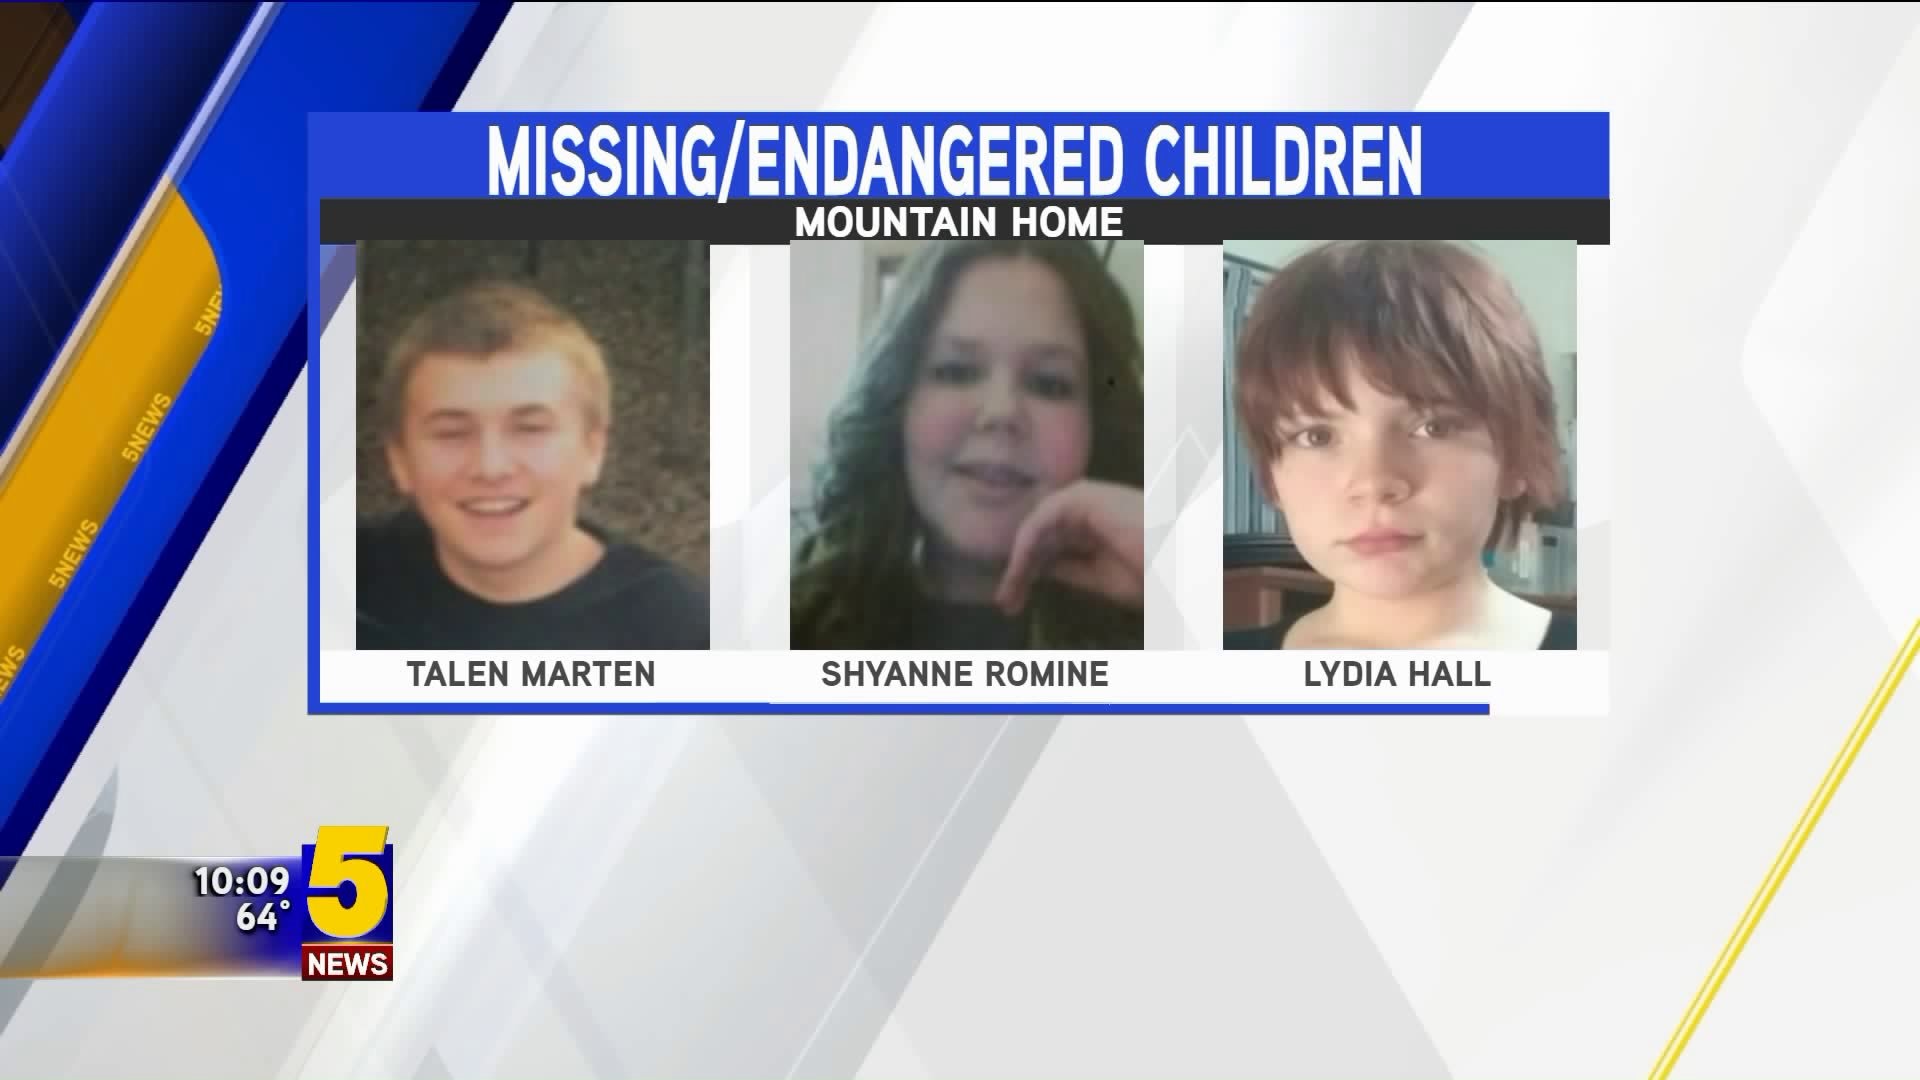 Missing/Endangered Children from Mountain Home